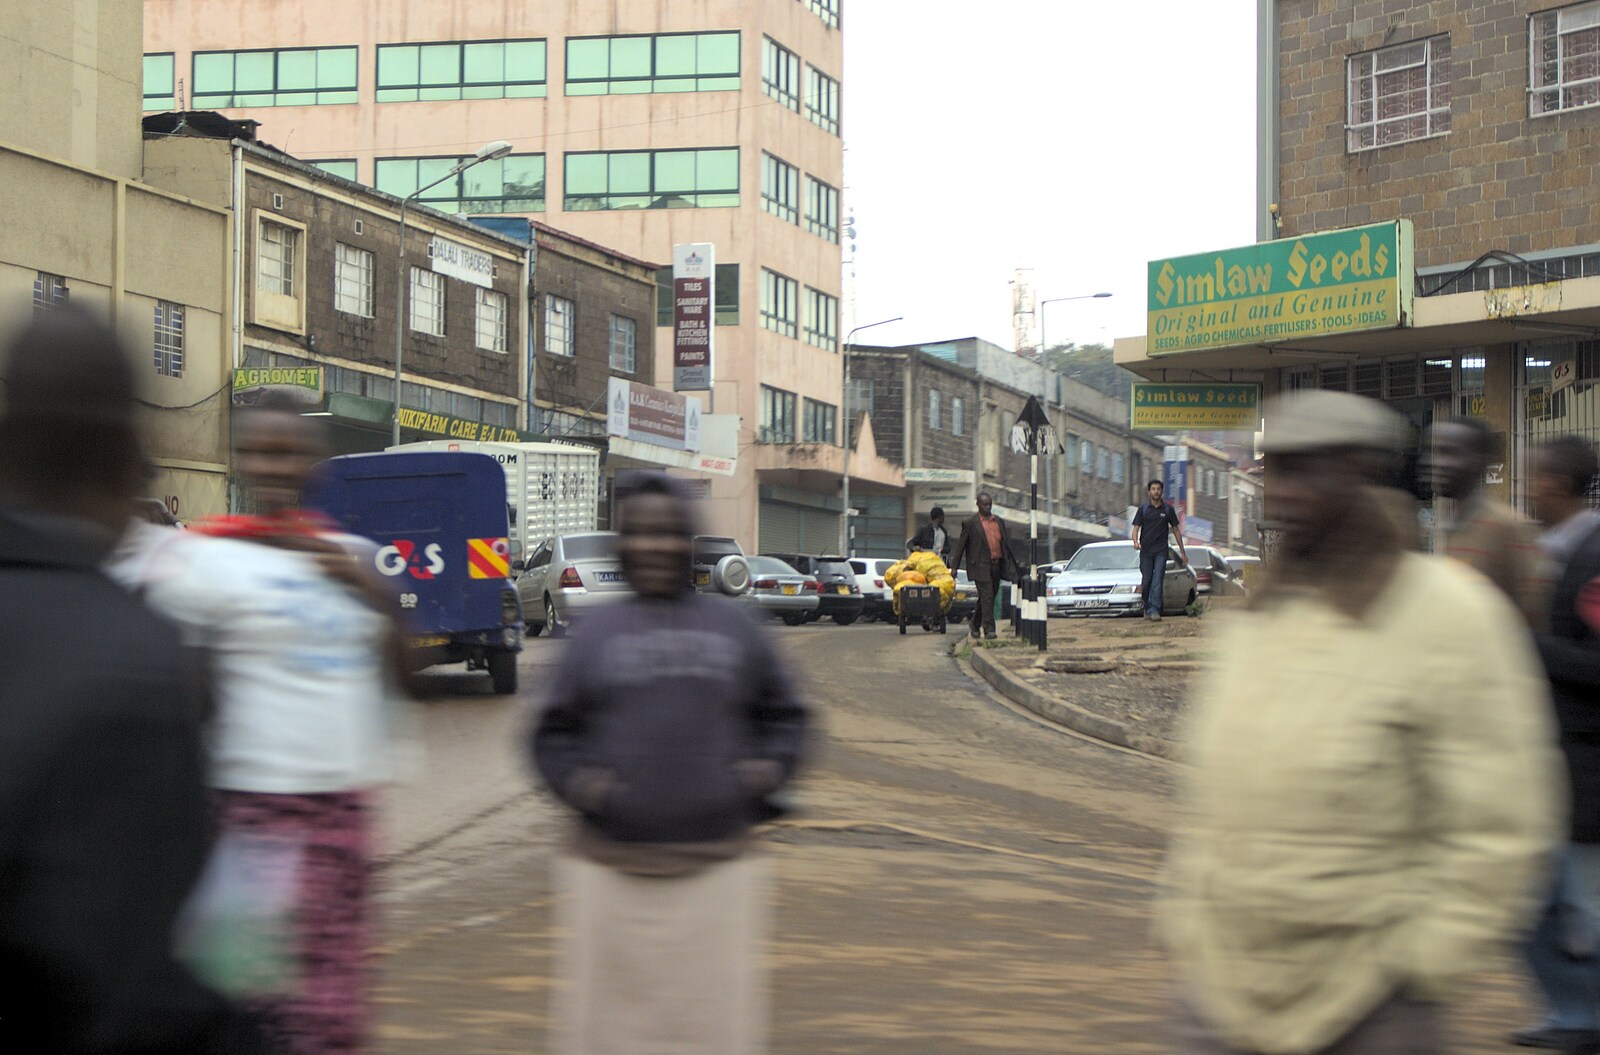 Street scene from Nairobi and the Road to Maasai Mara, Kenya, Africa - 1st November 2010